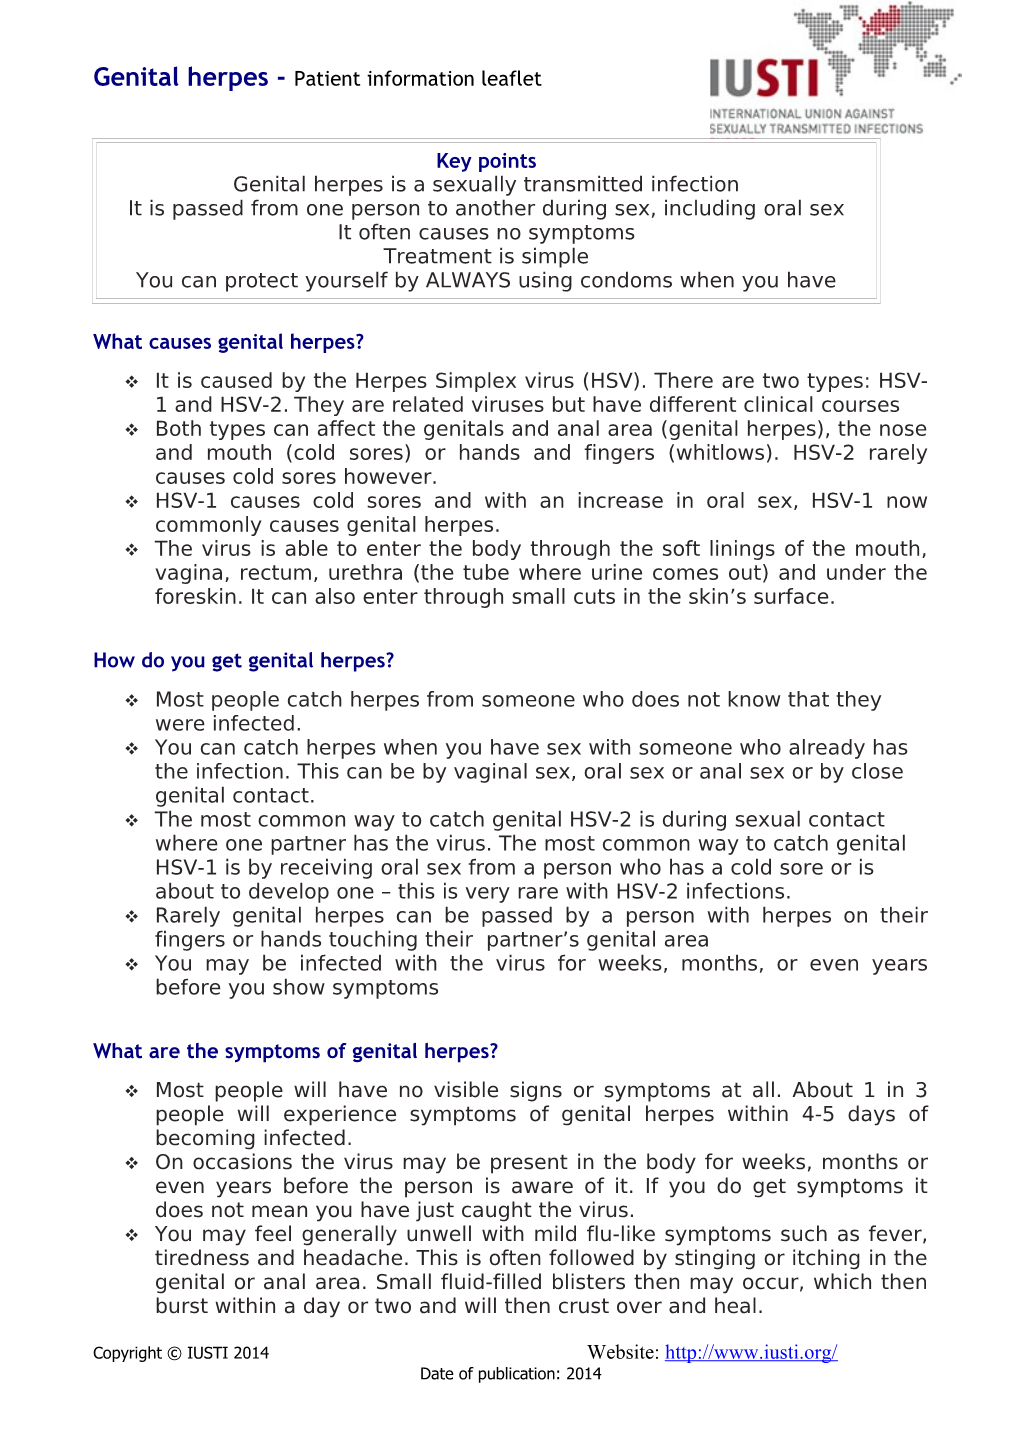 Genital Herpes - Patient Information Leaflet